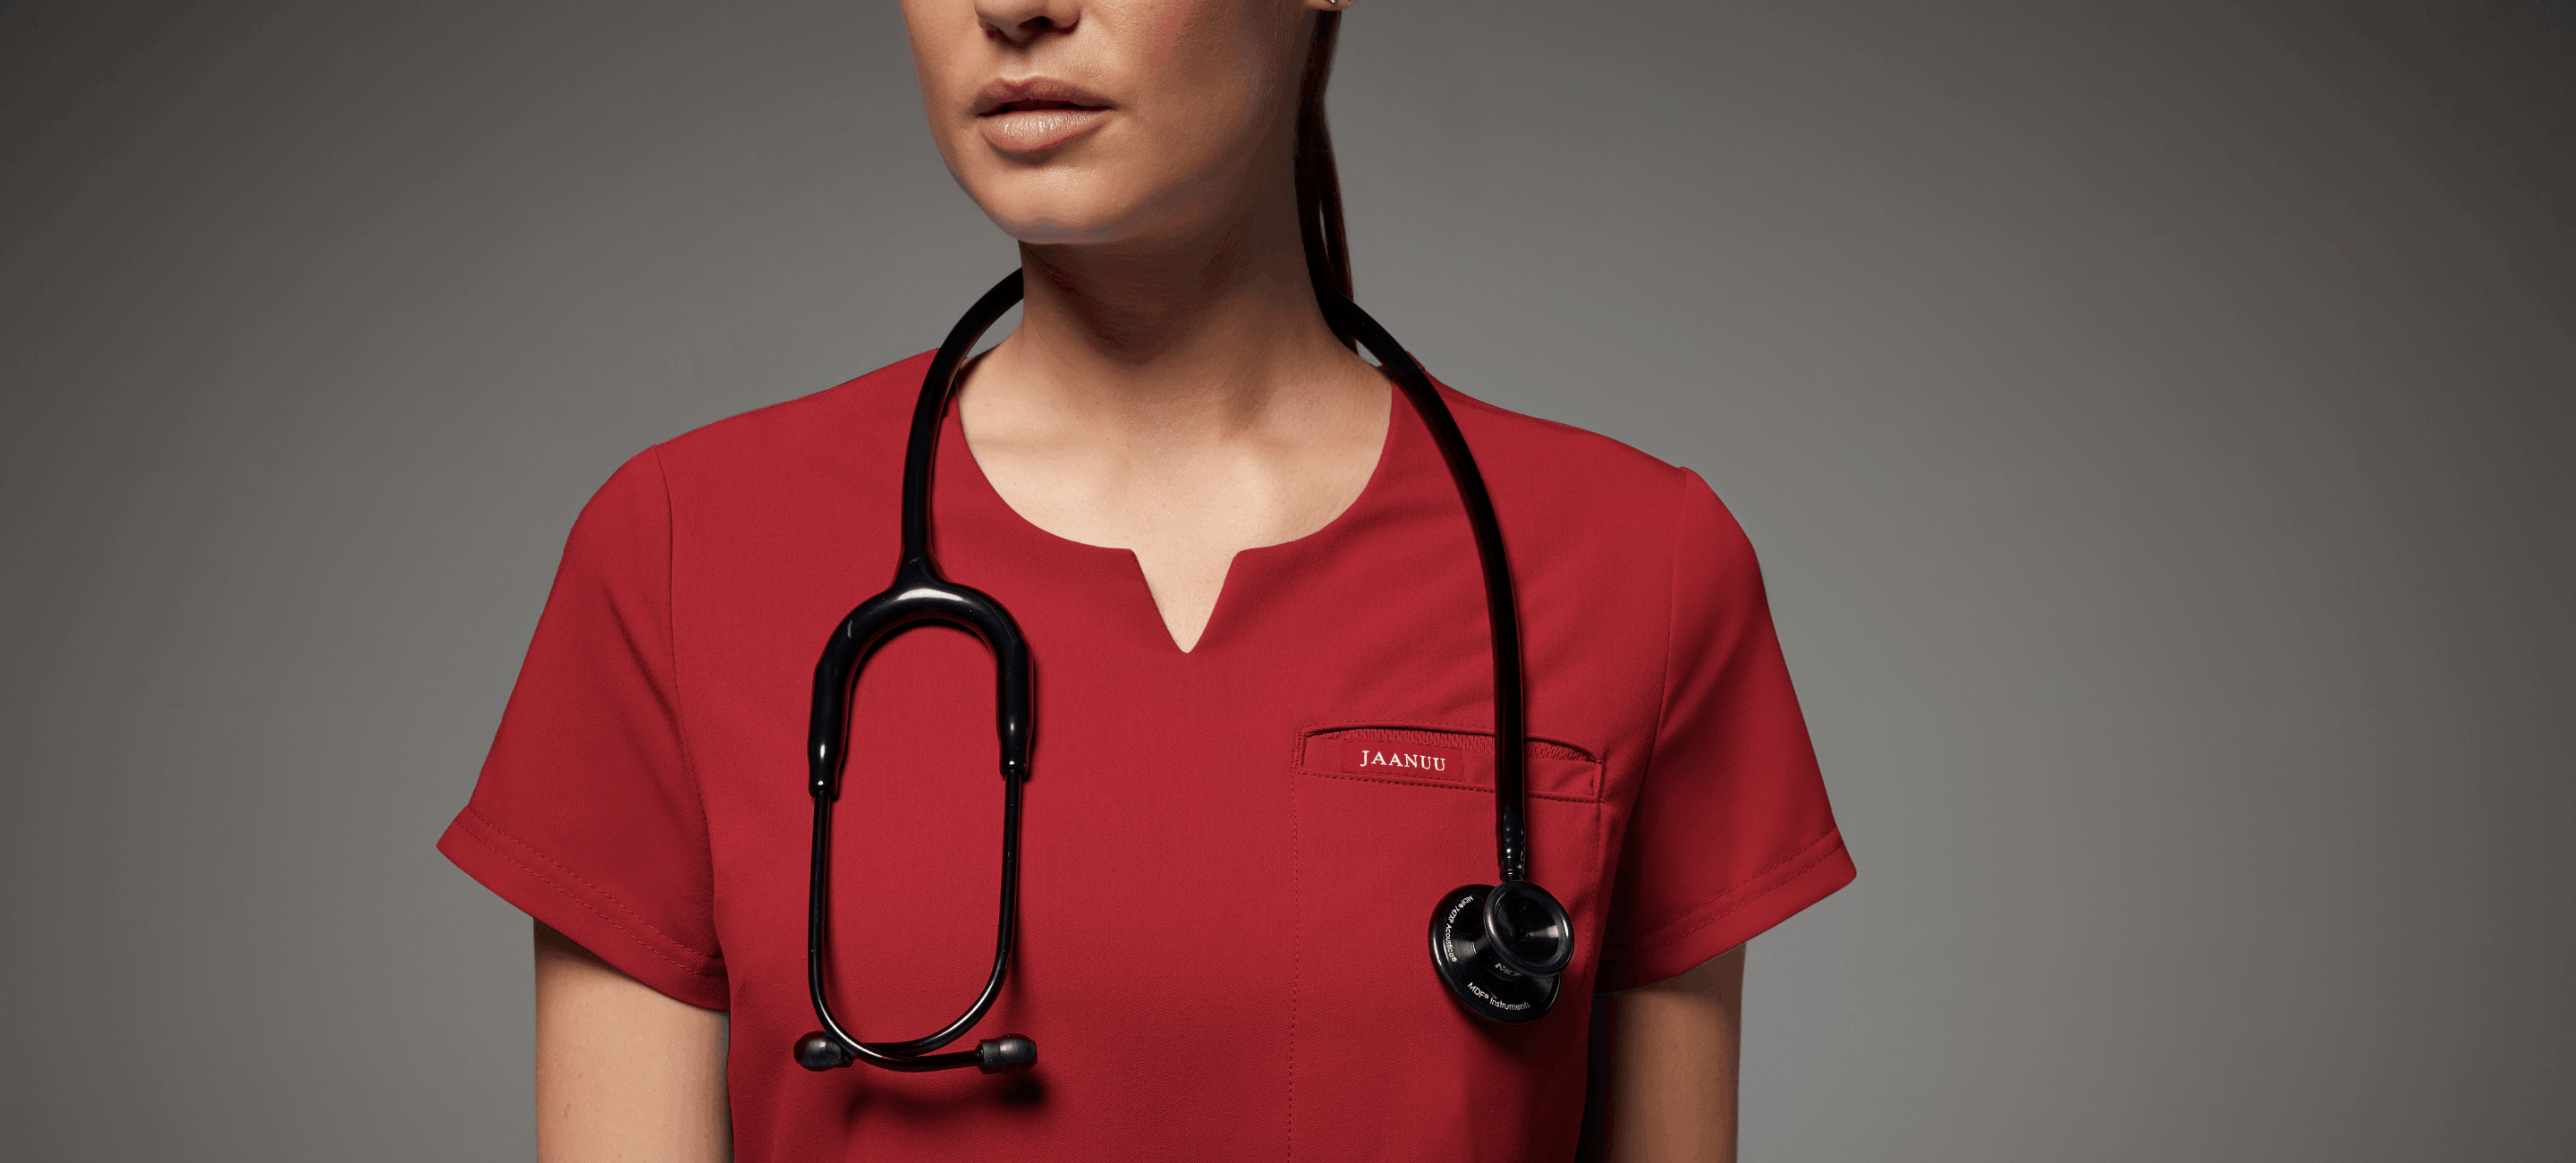 Top 9 Nurse Accessories for Work